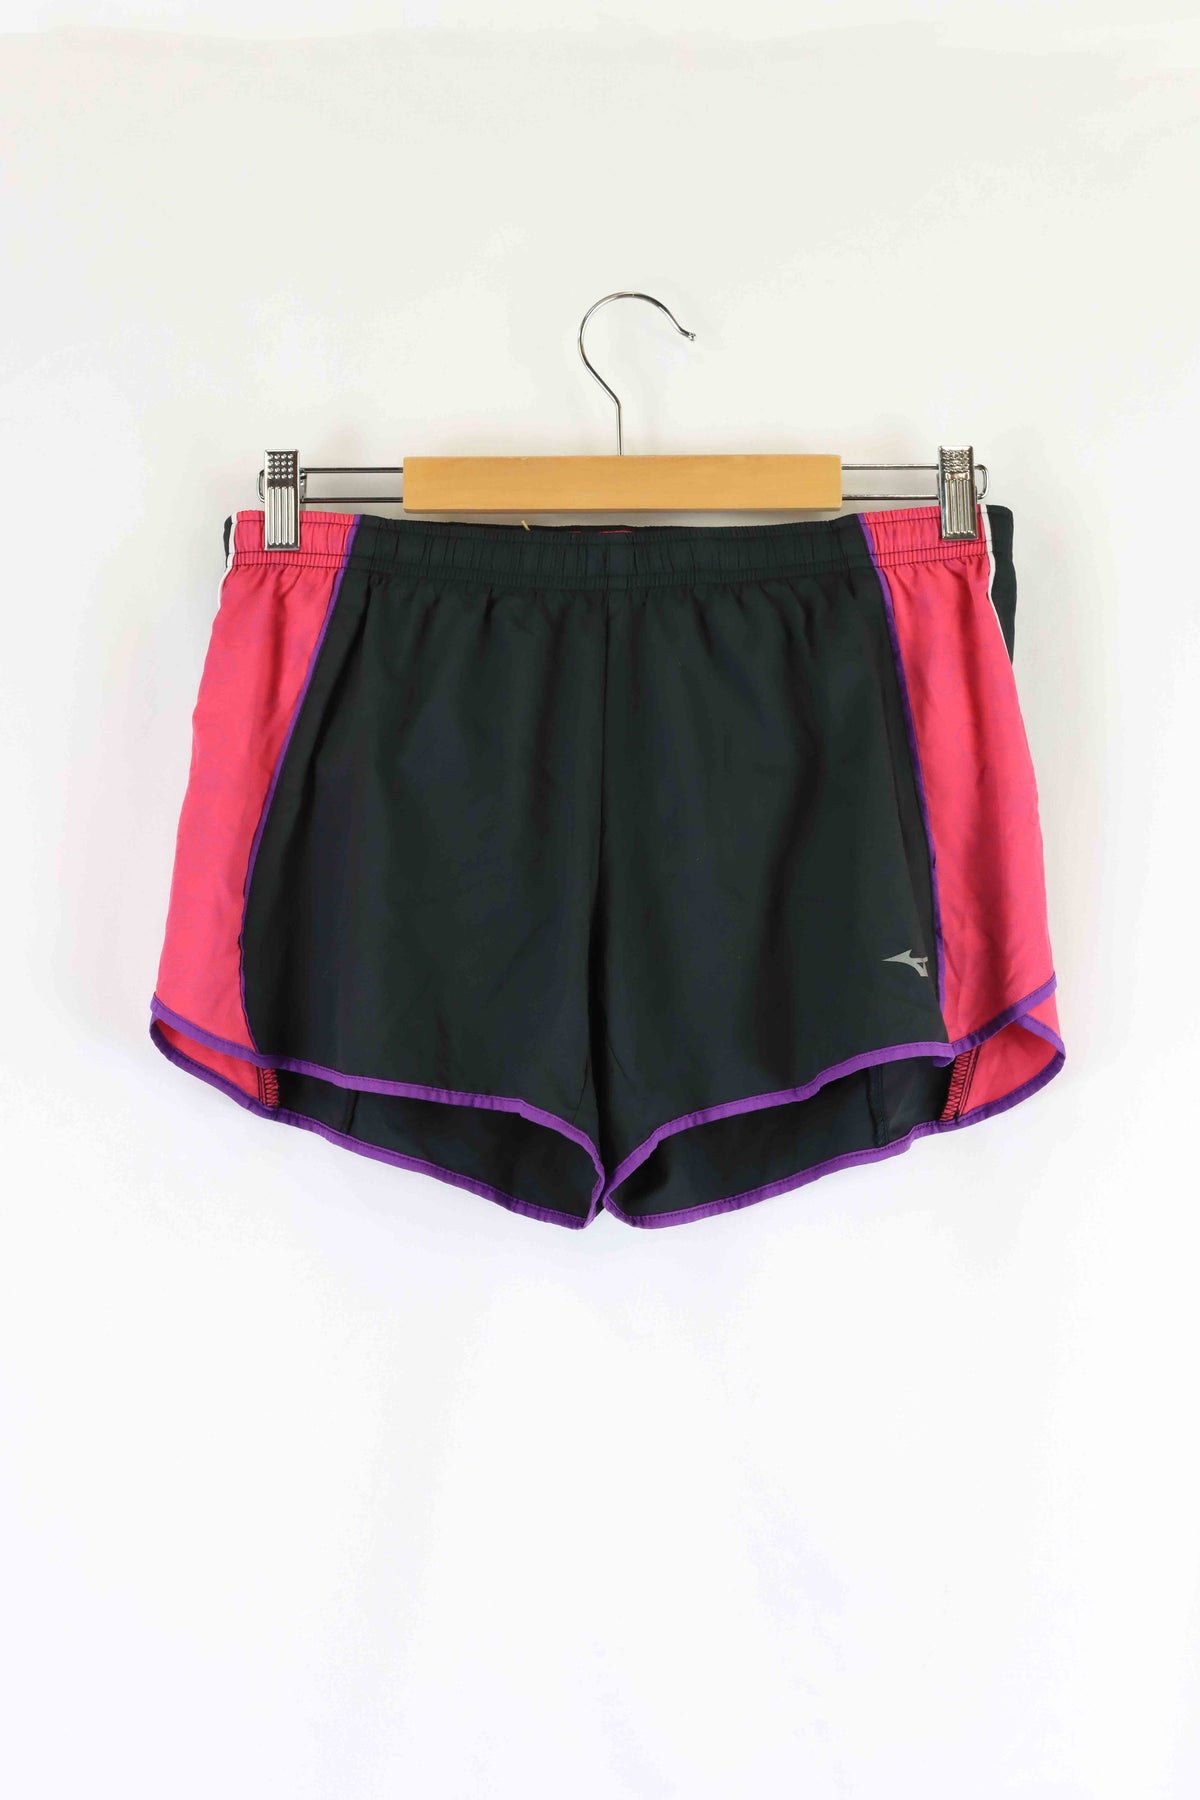 Mizuno Pink Black Shorts S